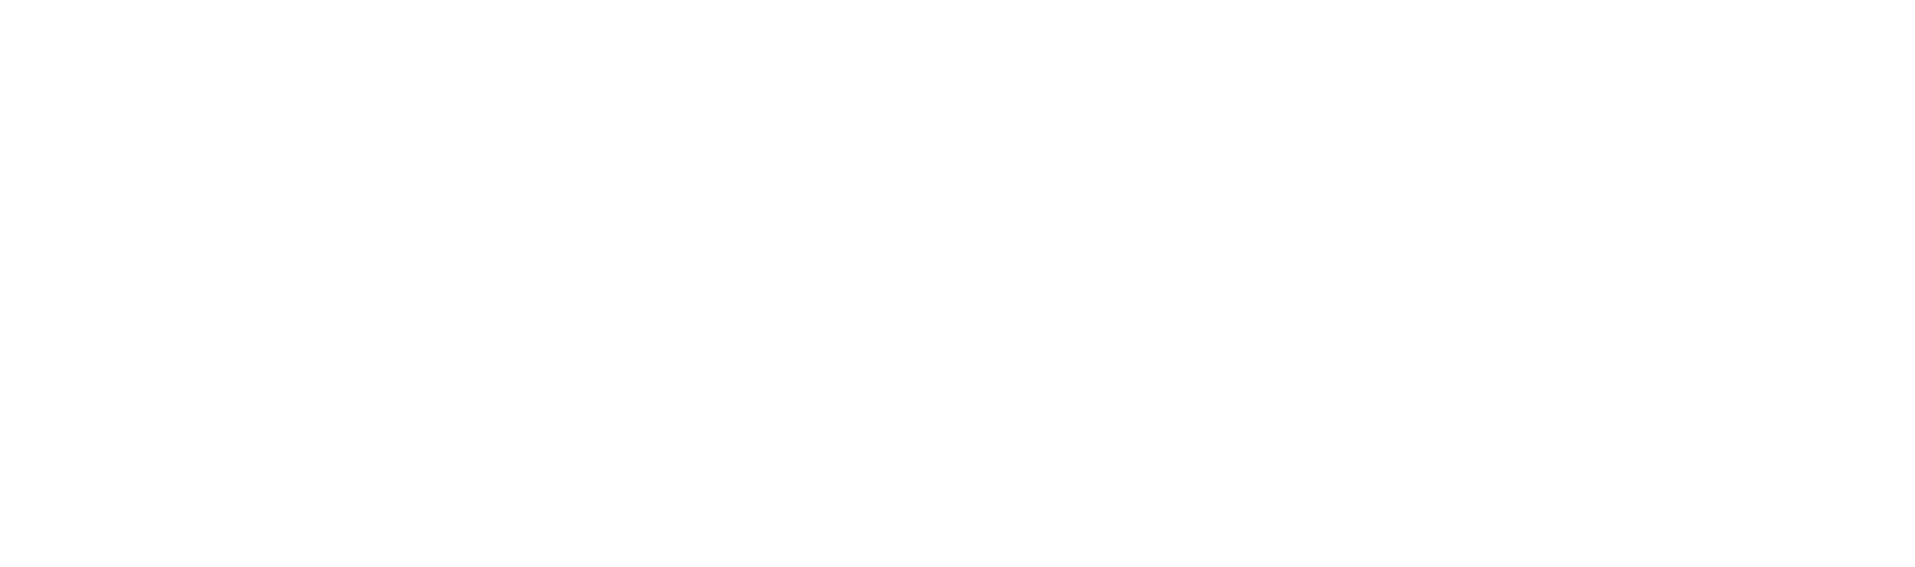 Kelly General Contracting LLC logo